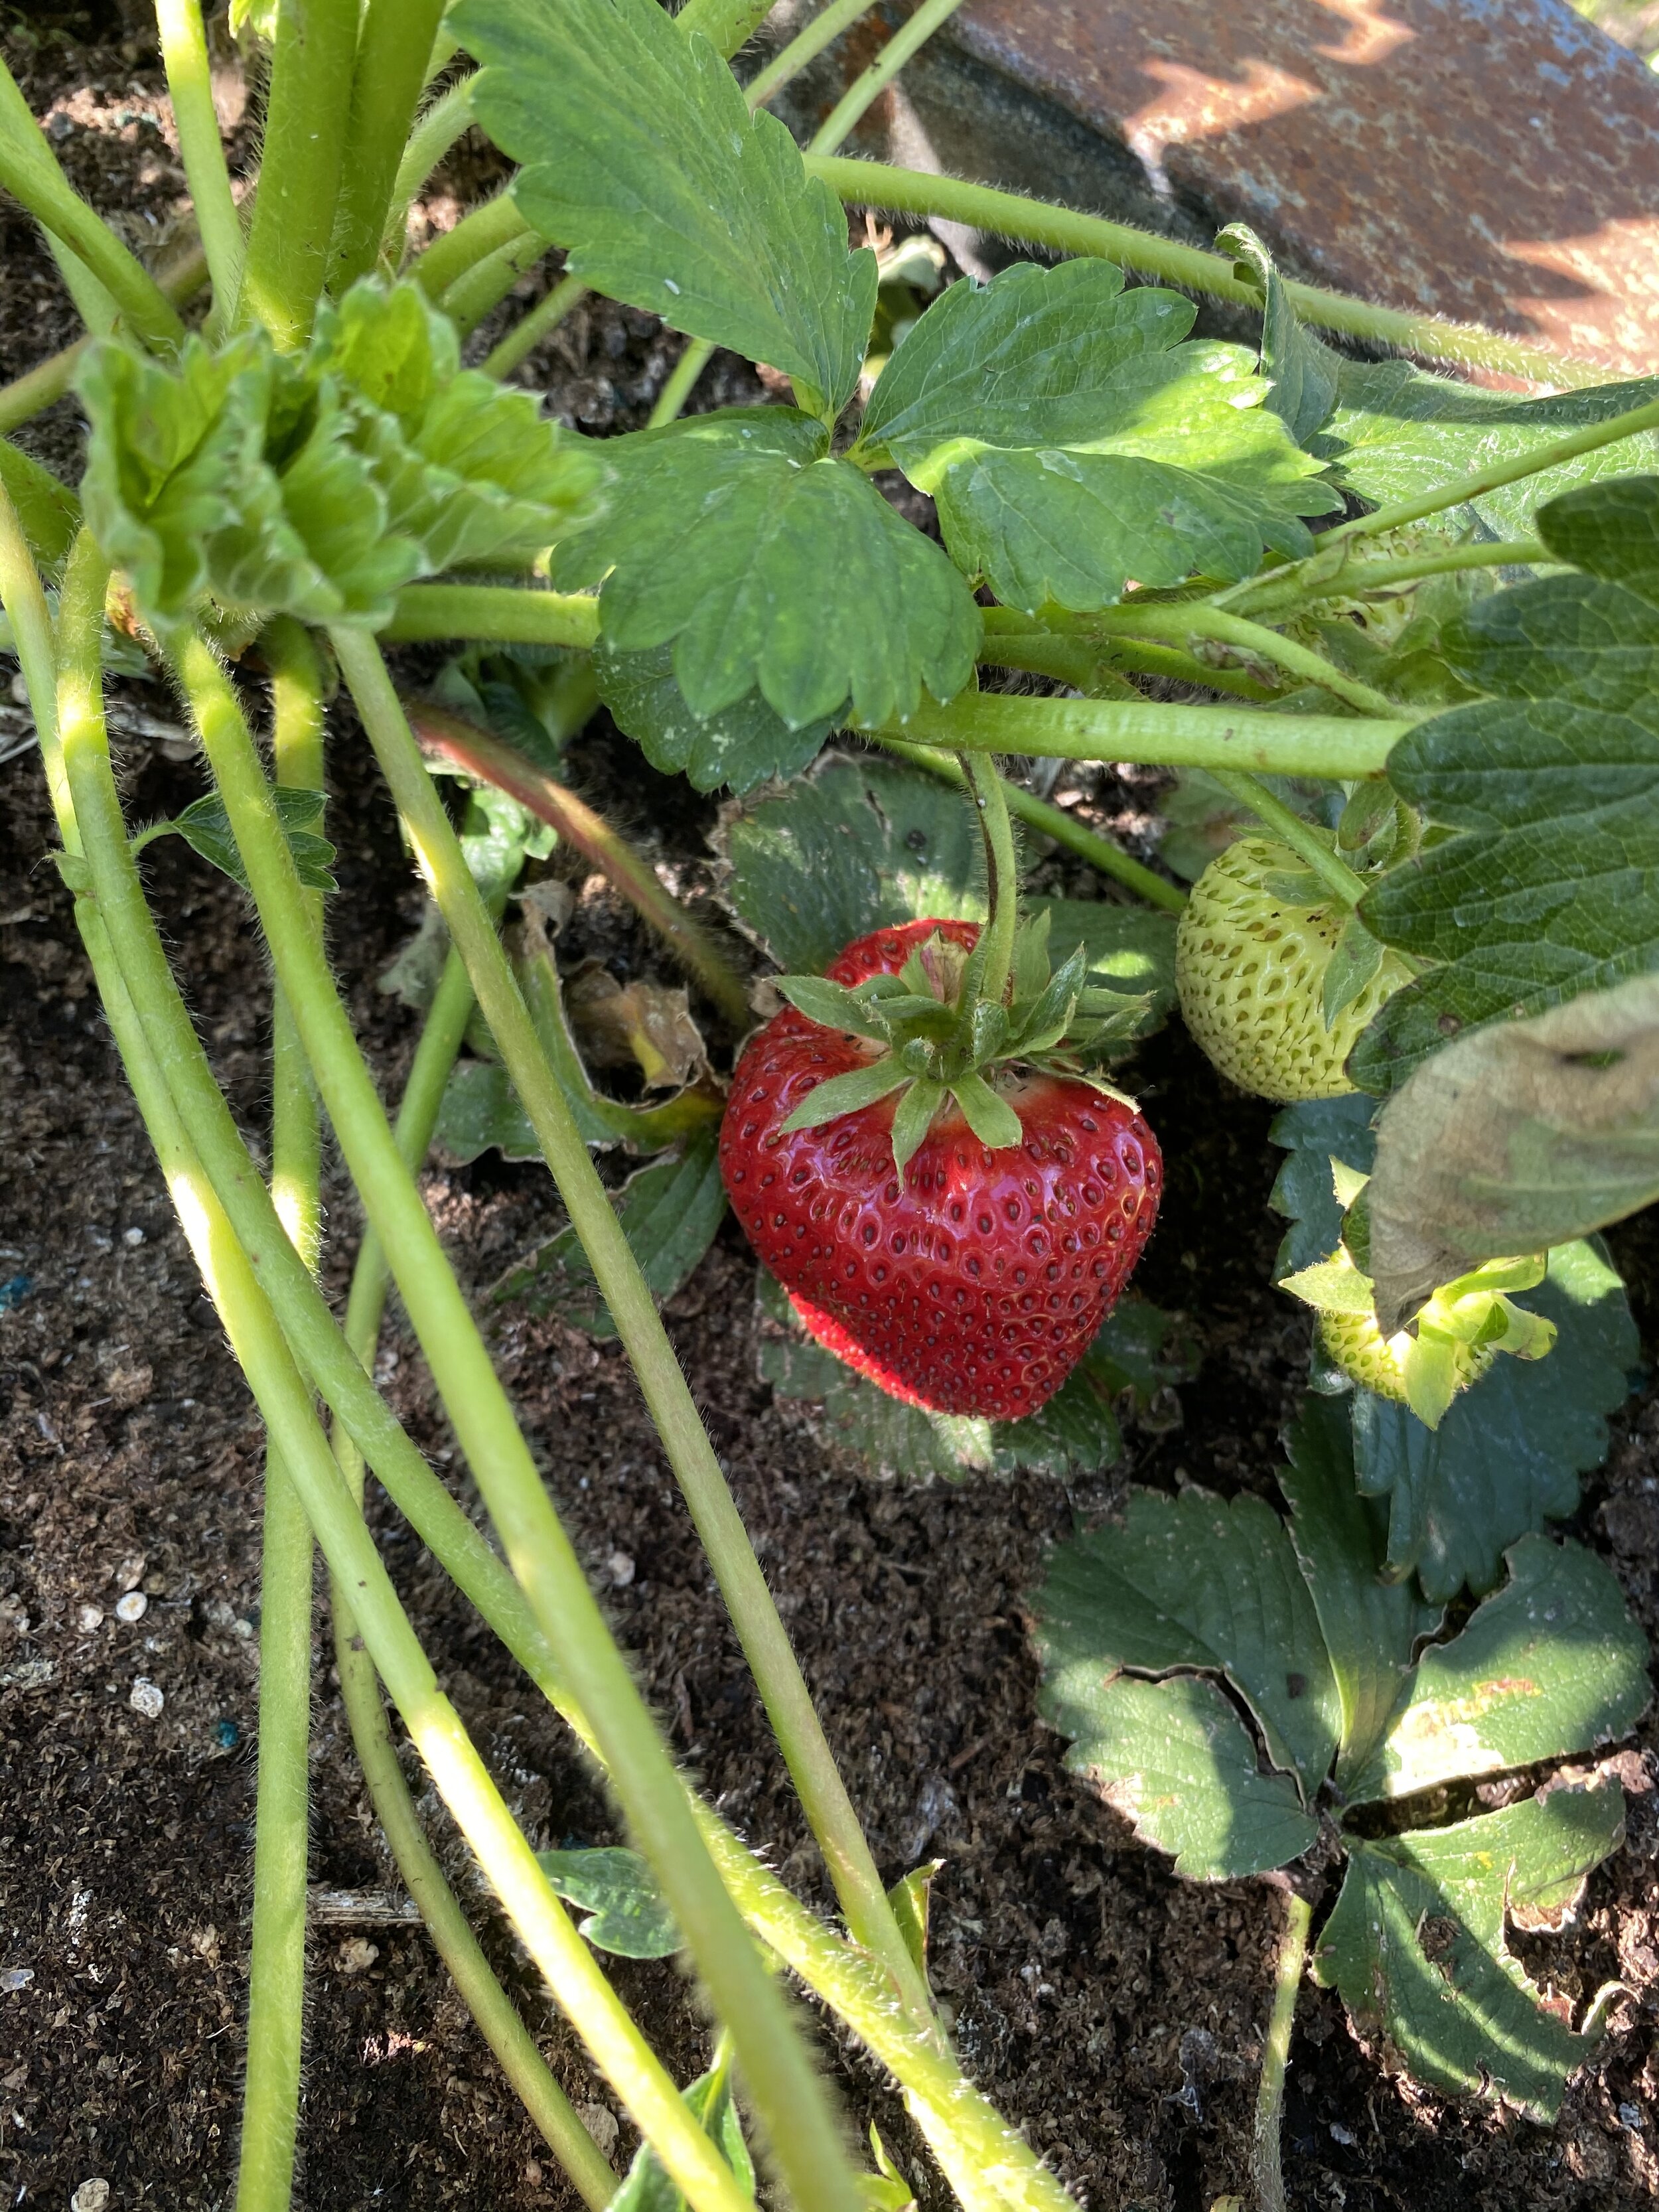 Strawberries a plenty!